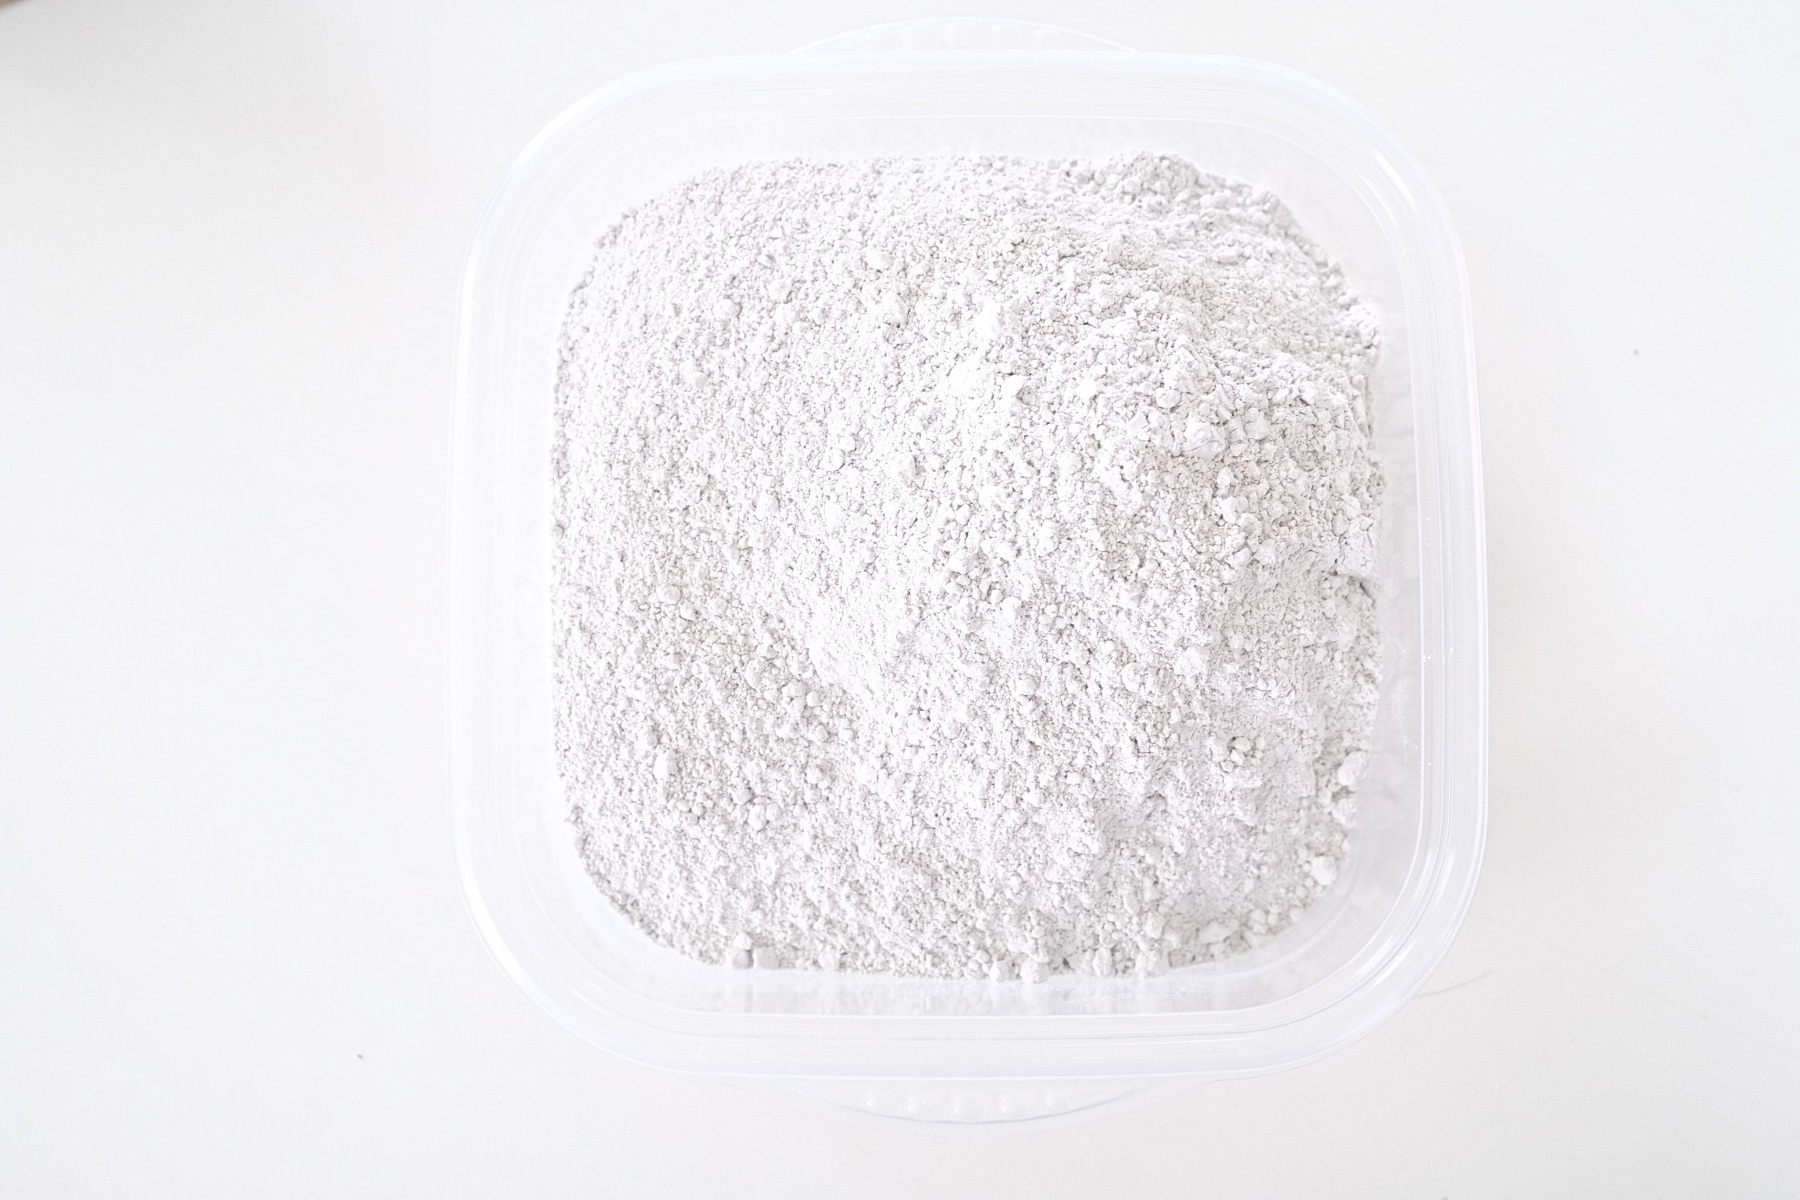 pour the dry concrete powder into a container